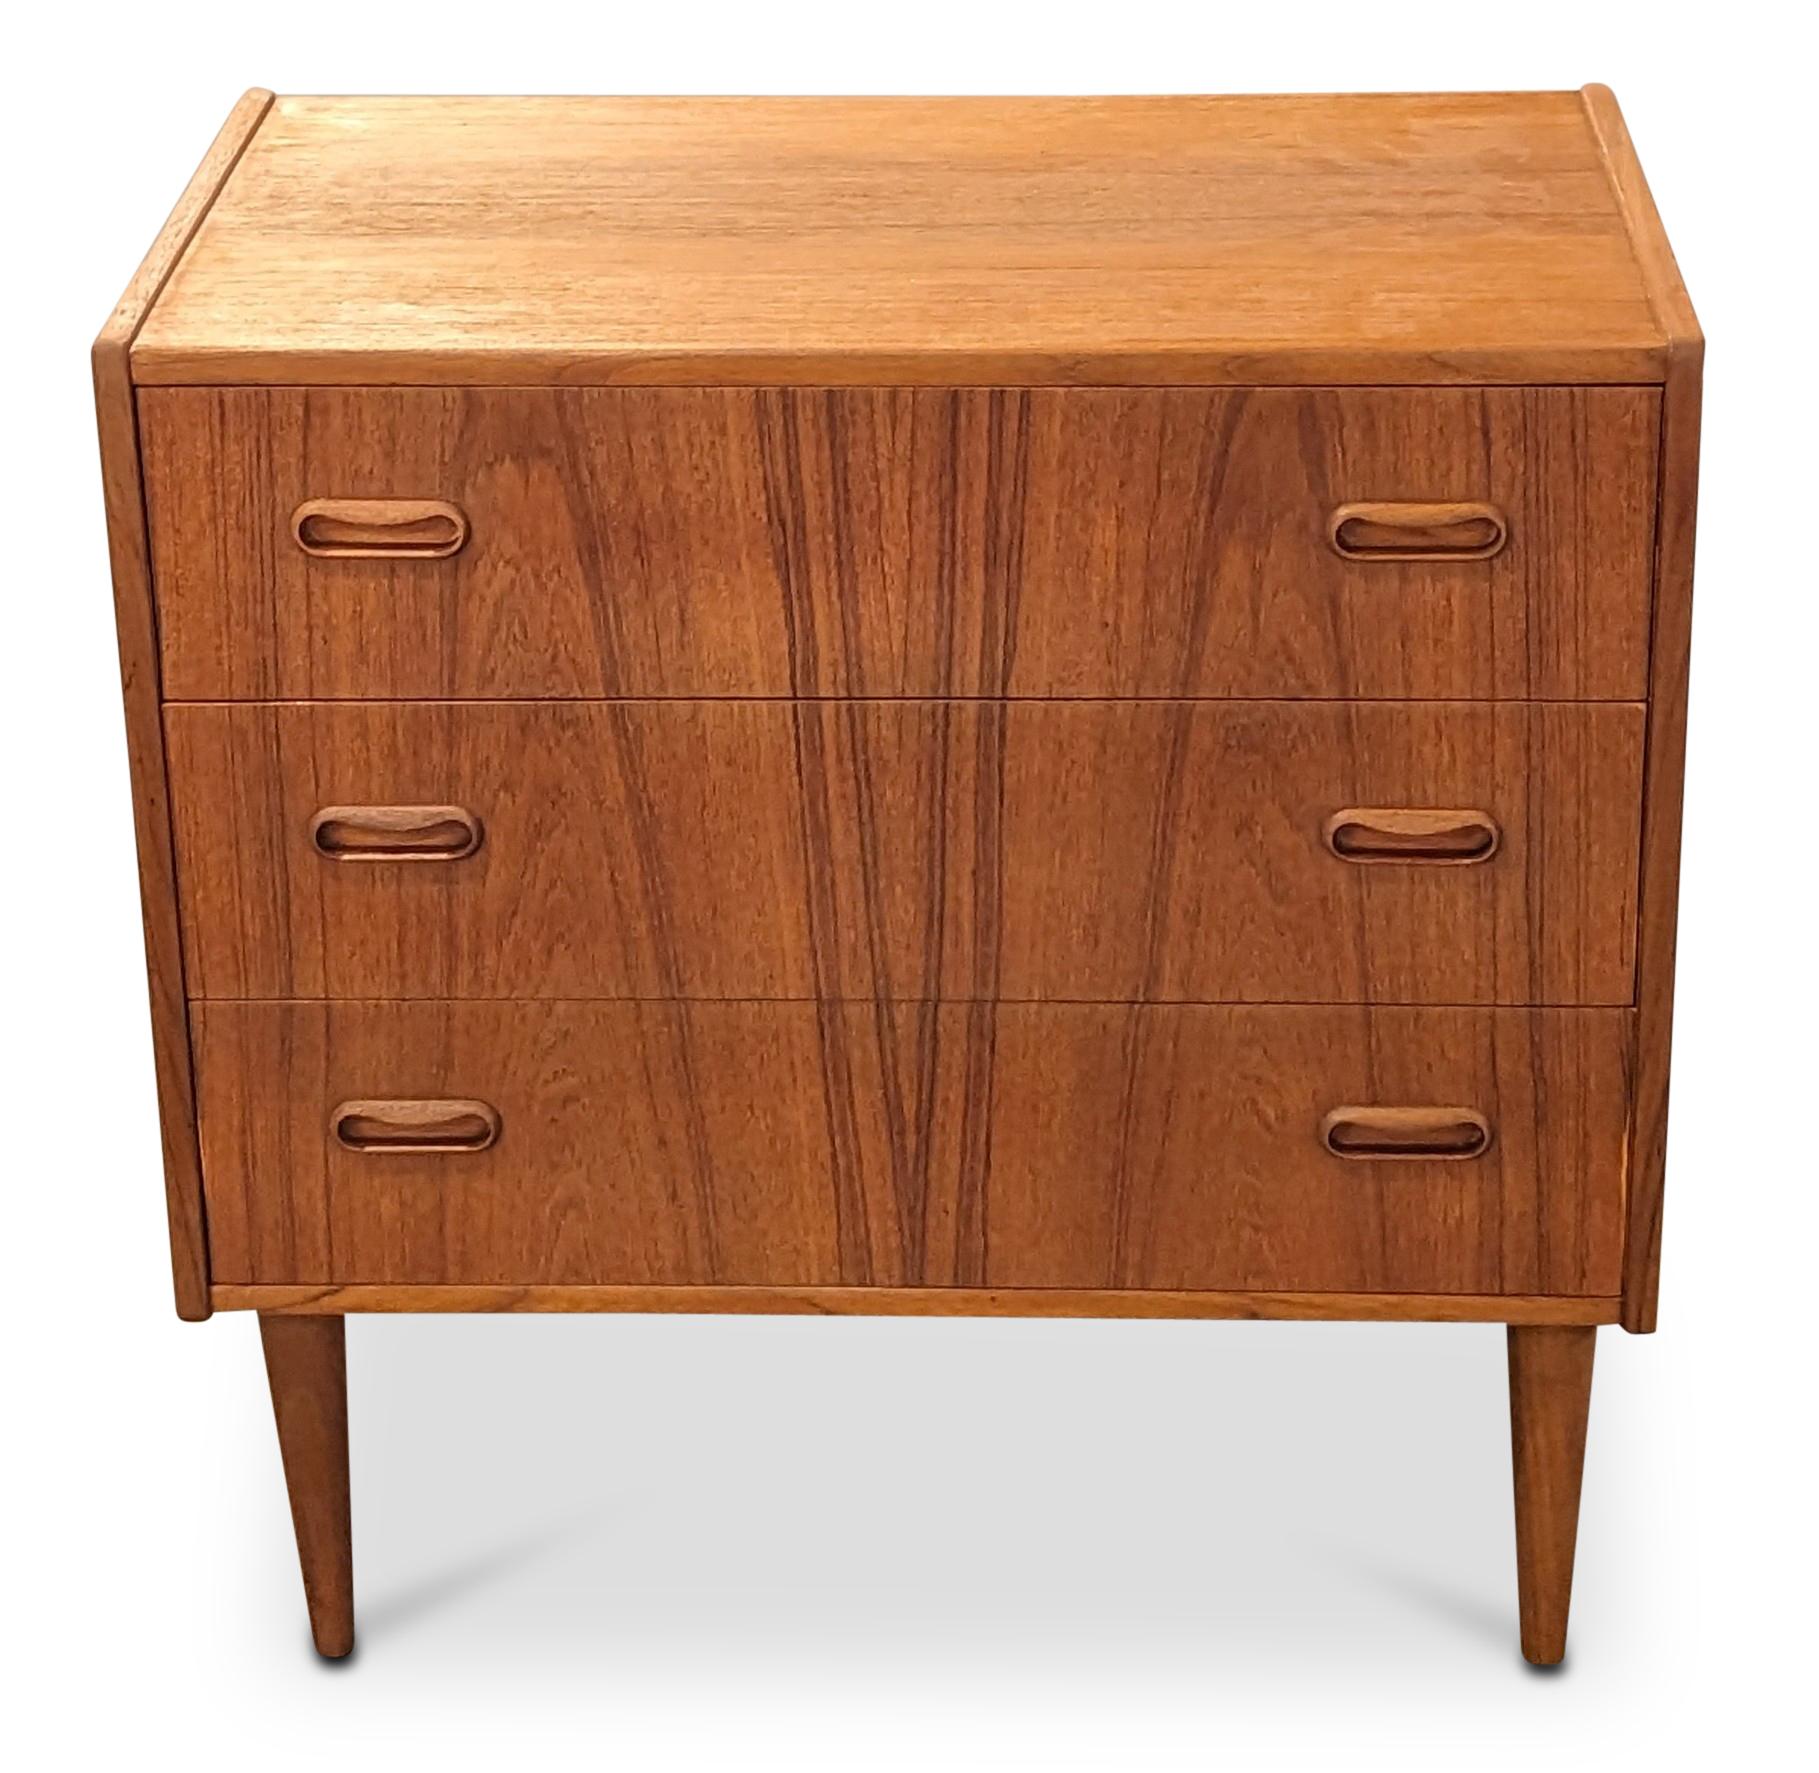 Mid-20th Century Vintage Danish Mid Century Teak Dresser / Nightstand - 072343